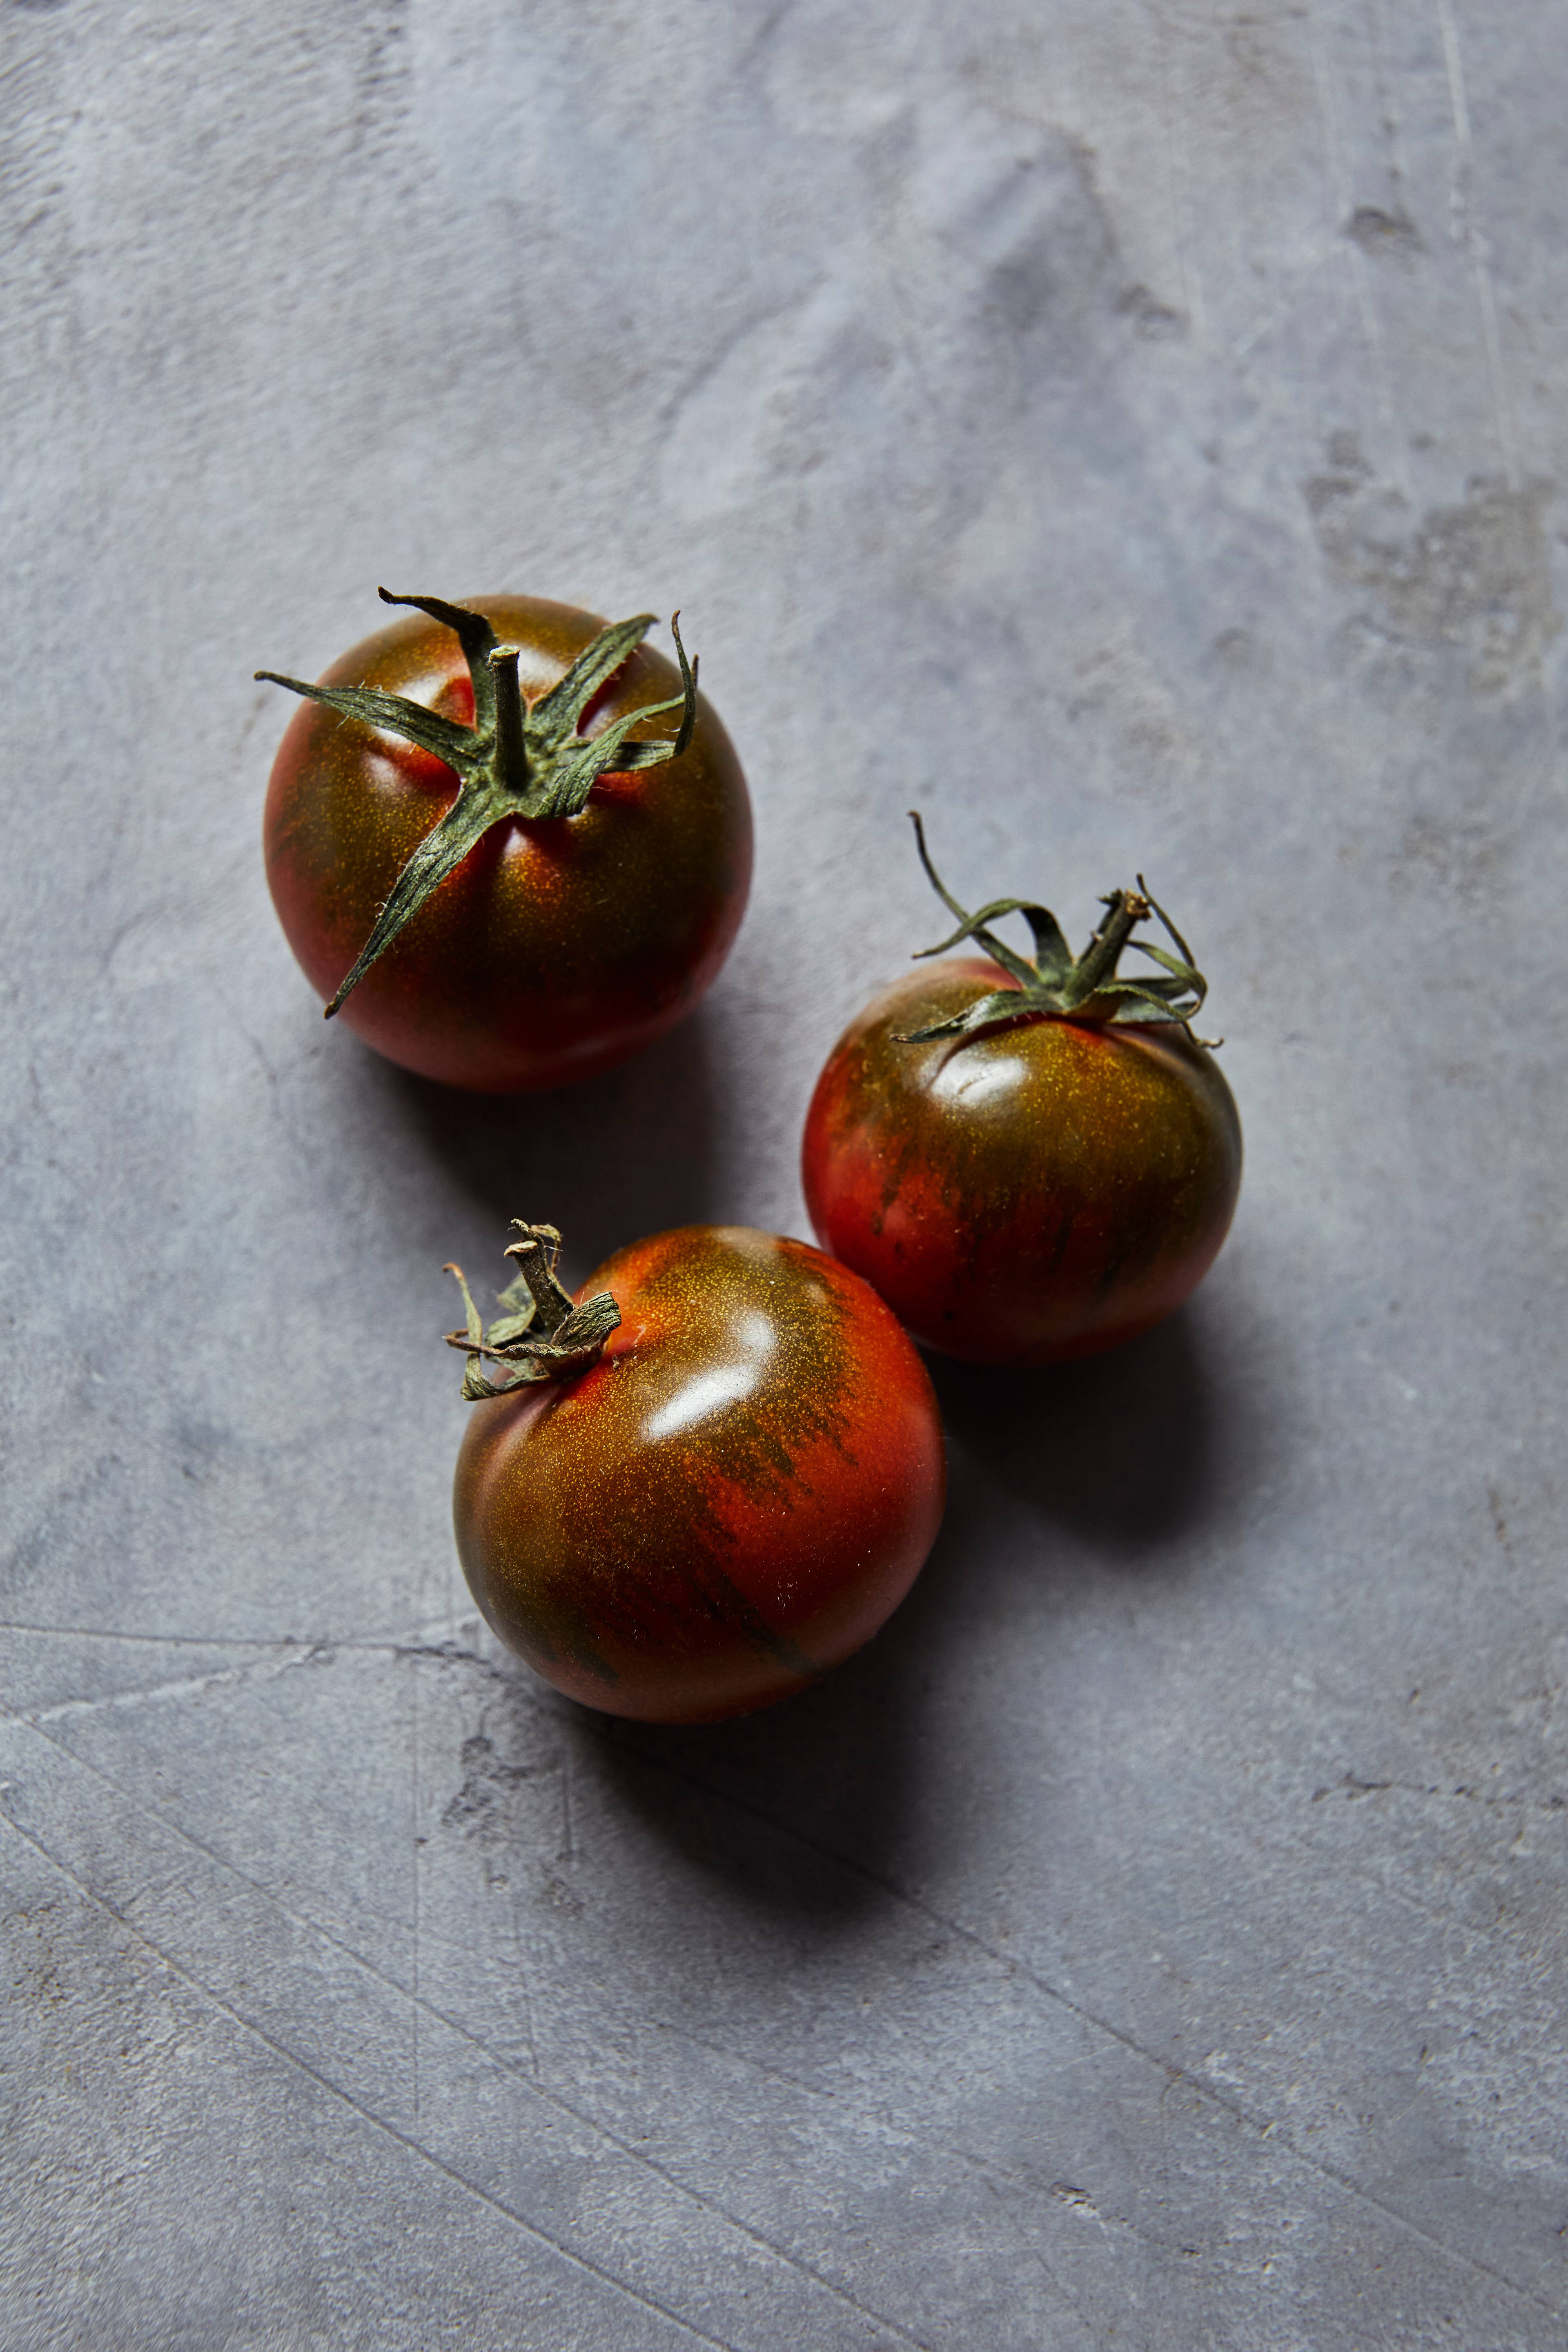 camone tomatoes